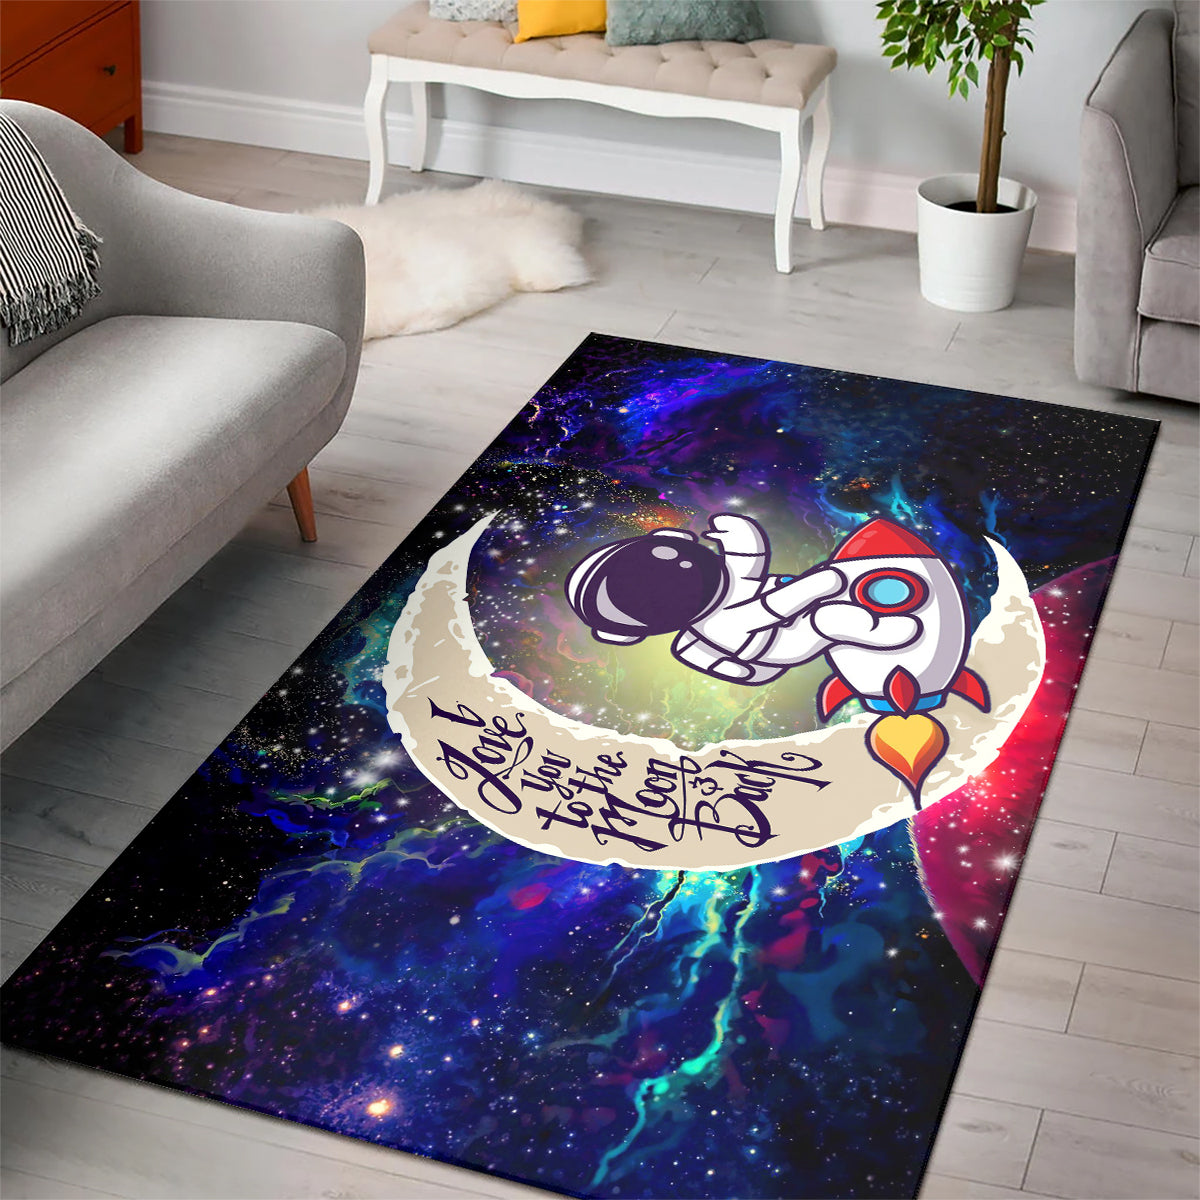 Astronaut Chibi Love You To The Moon Galaxy Carpet Rug Home Room Decor